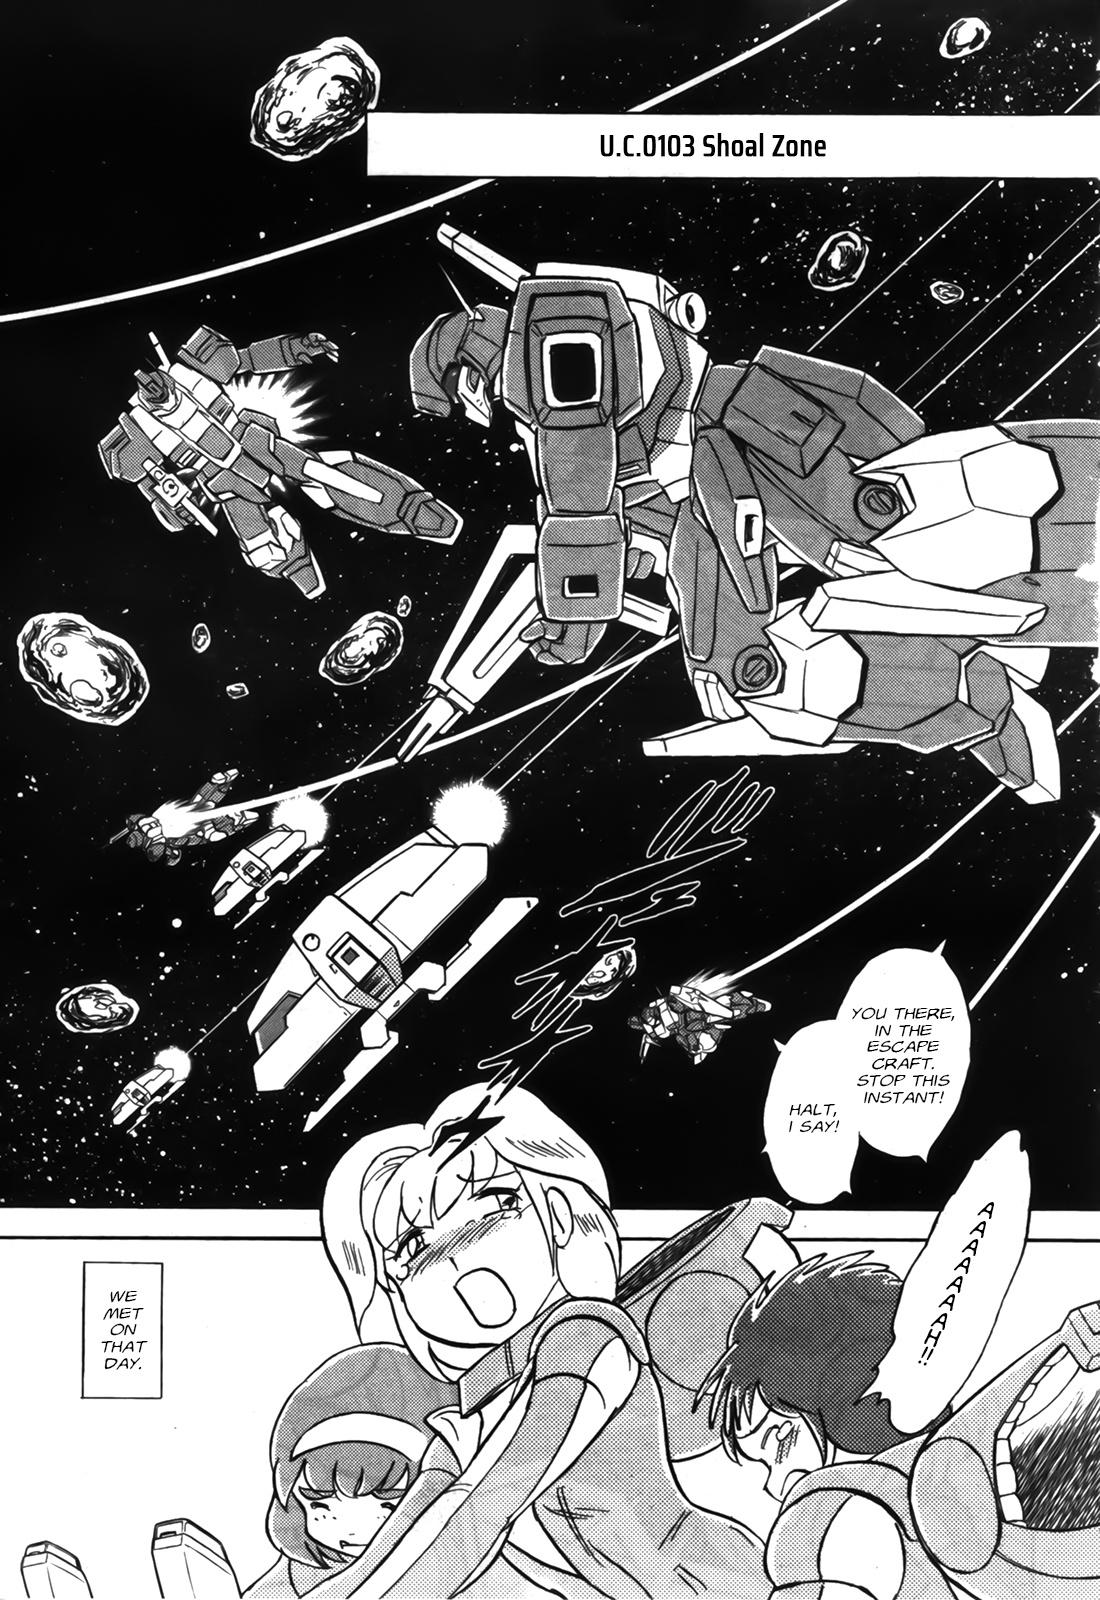 Mobile Suit Crossbone Gundam - Love & Piece - Page 3